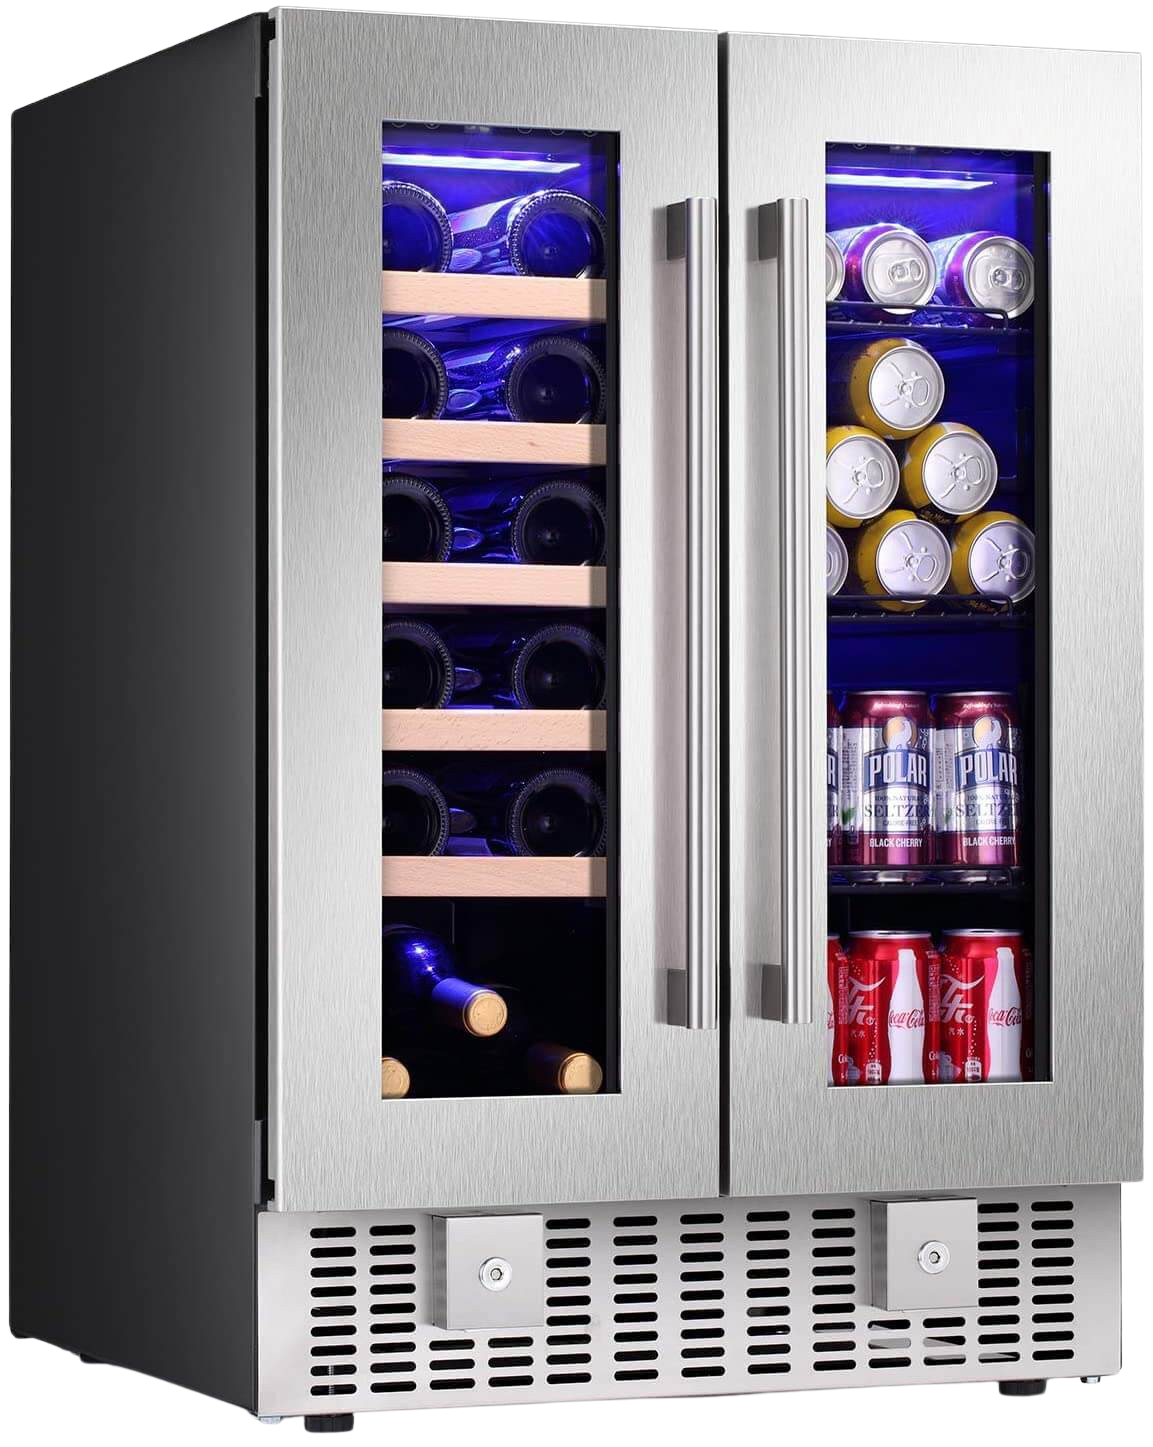 Antarctic Star W515 24 Inch 2 Door Dual Zone Beverage Refrigerator with Digital Memory Temperature Control New